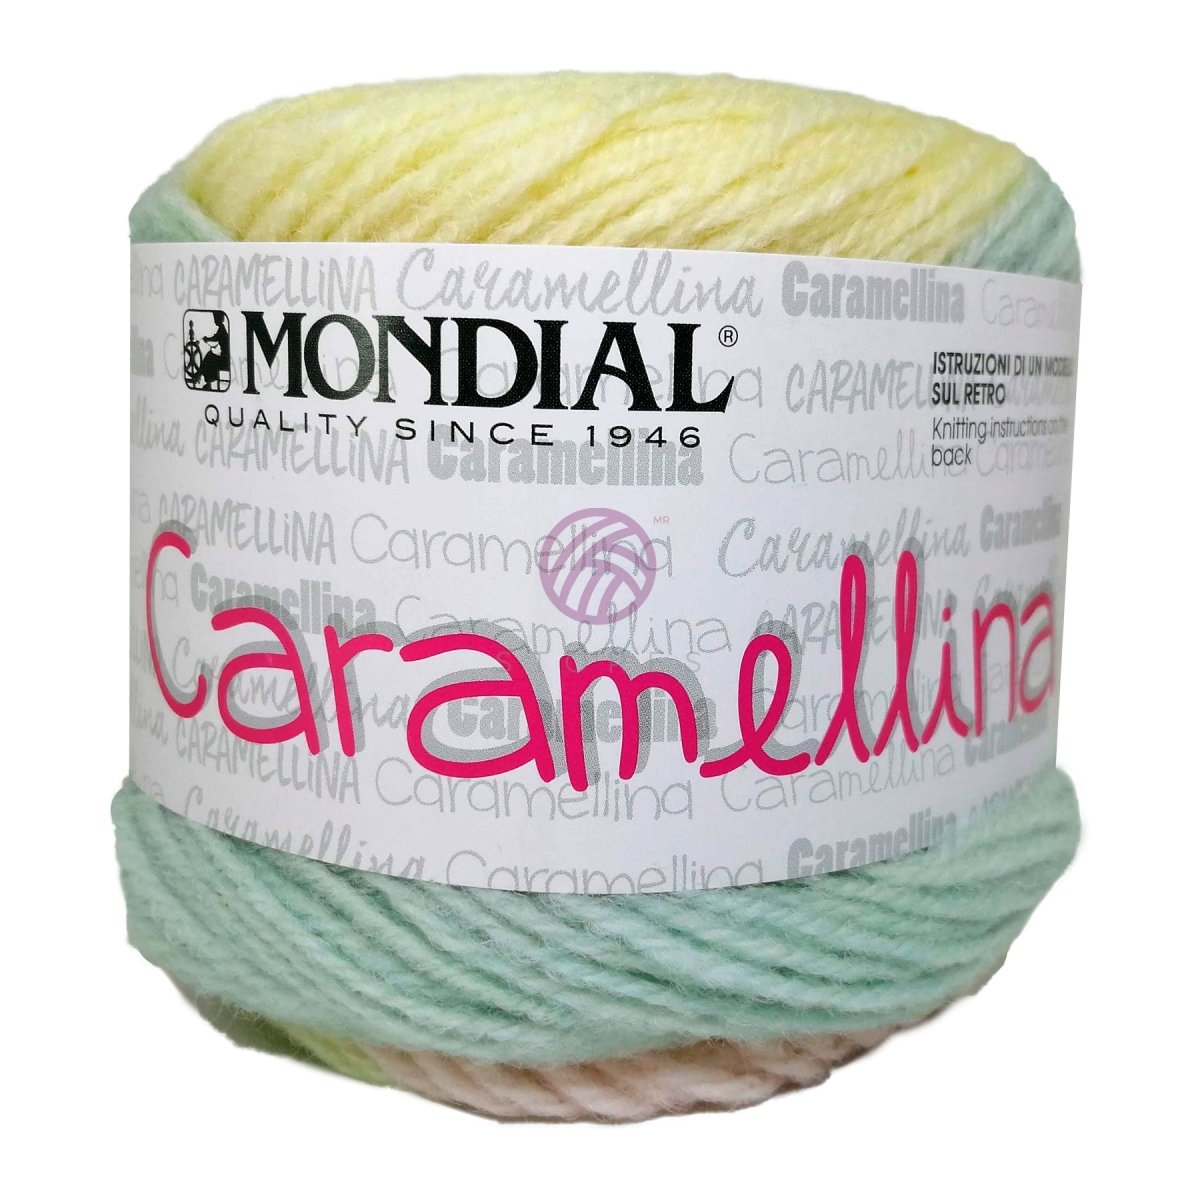 CARAMELLINA - Crochetstores12519068020586352784